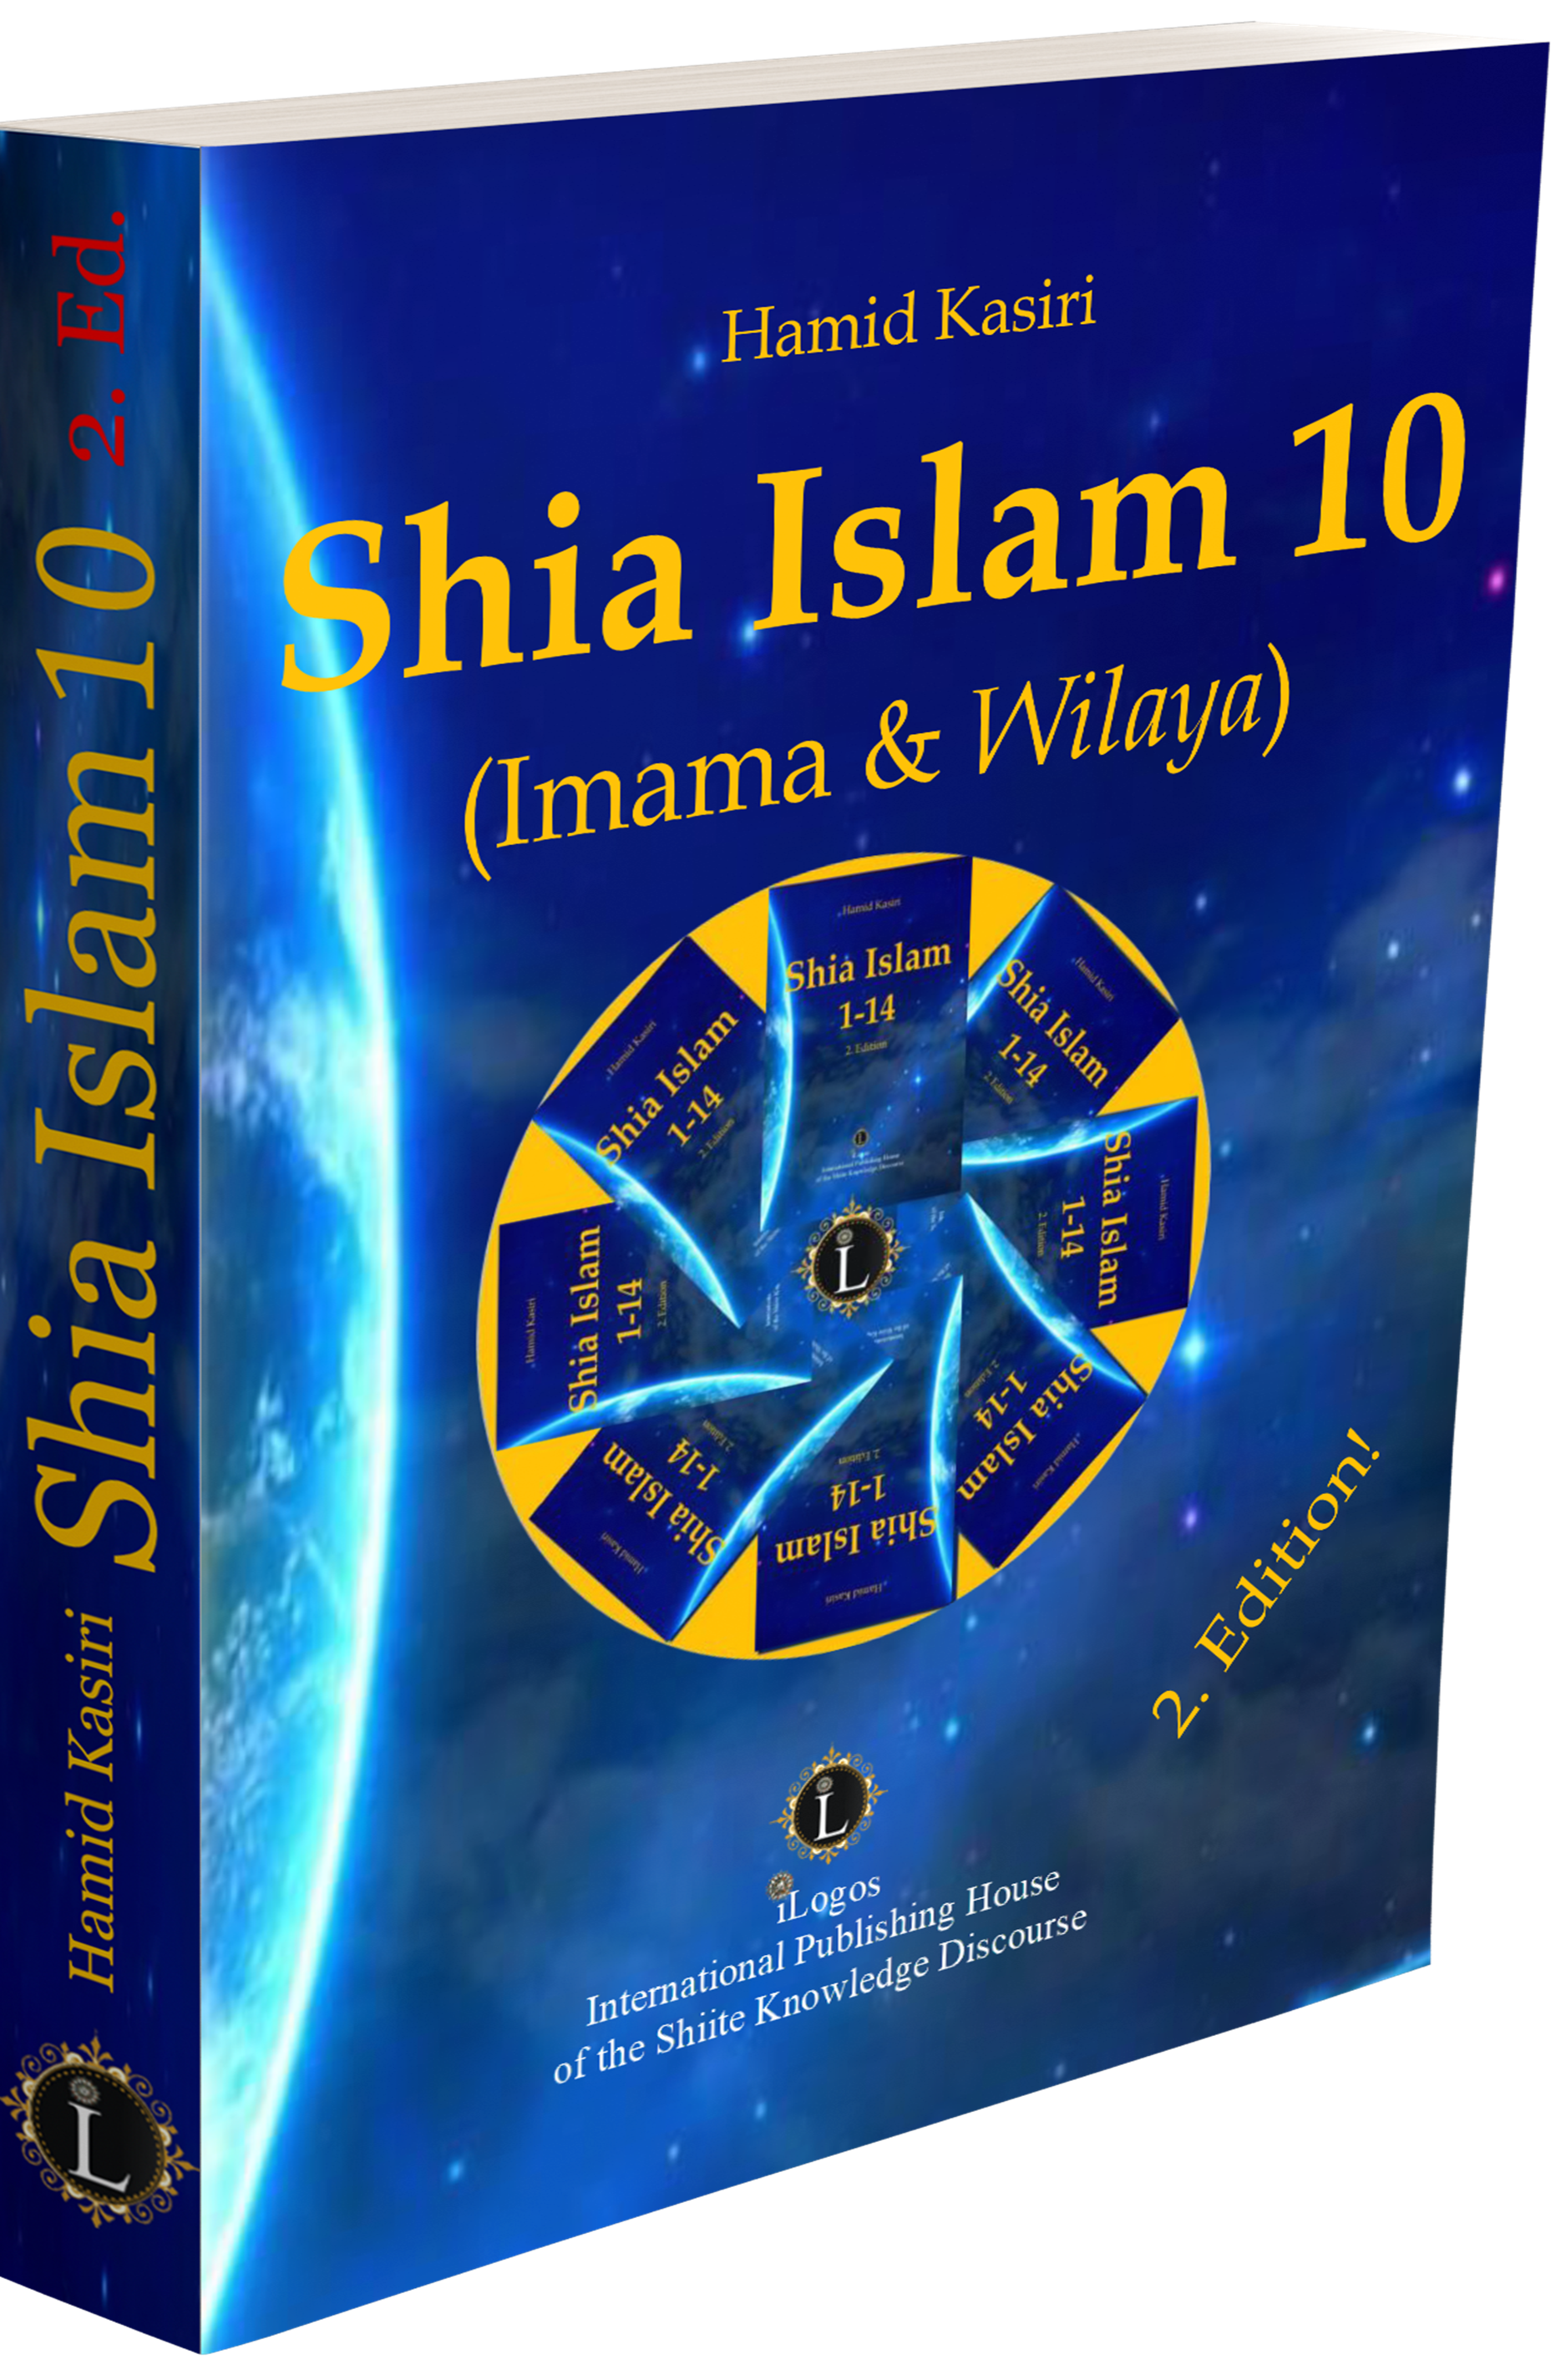 Schia Islam 10 (Imama & Wilaya), 2. Ed.